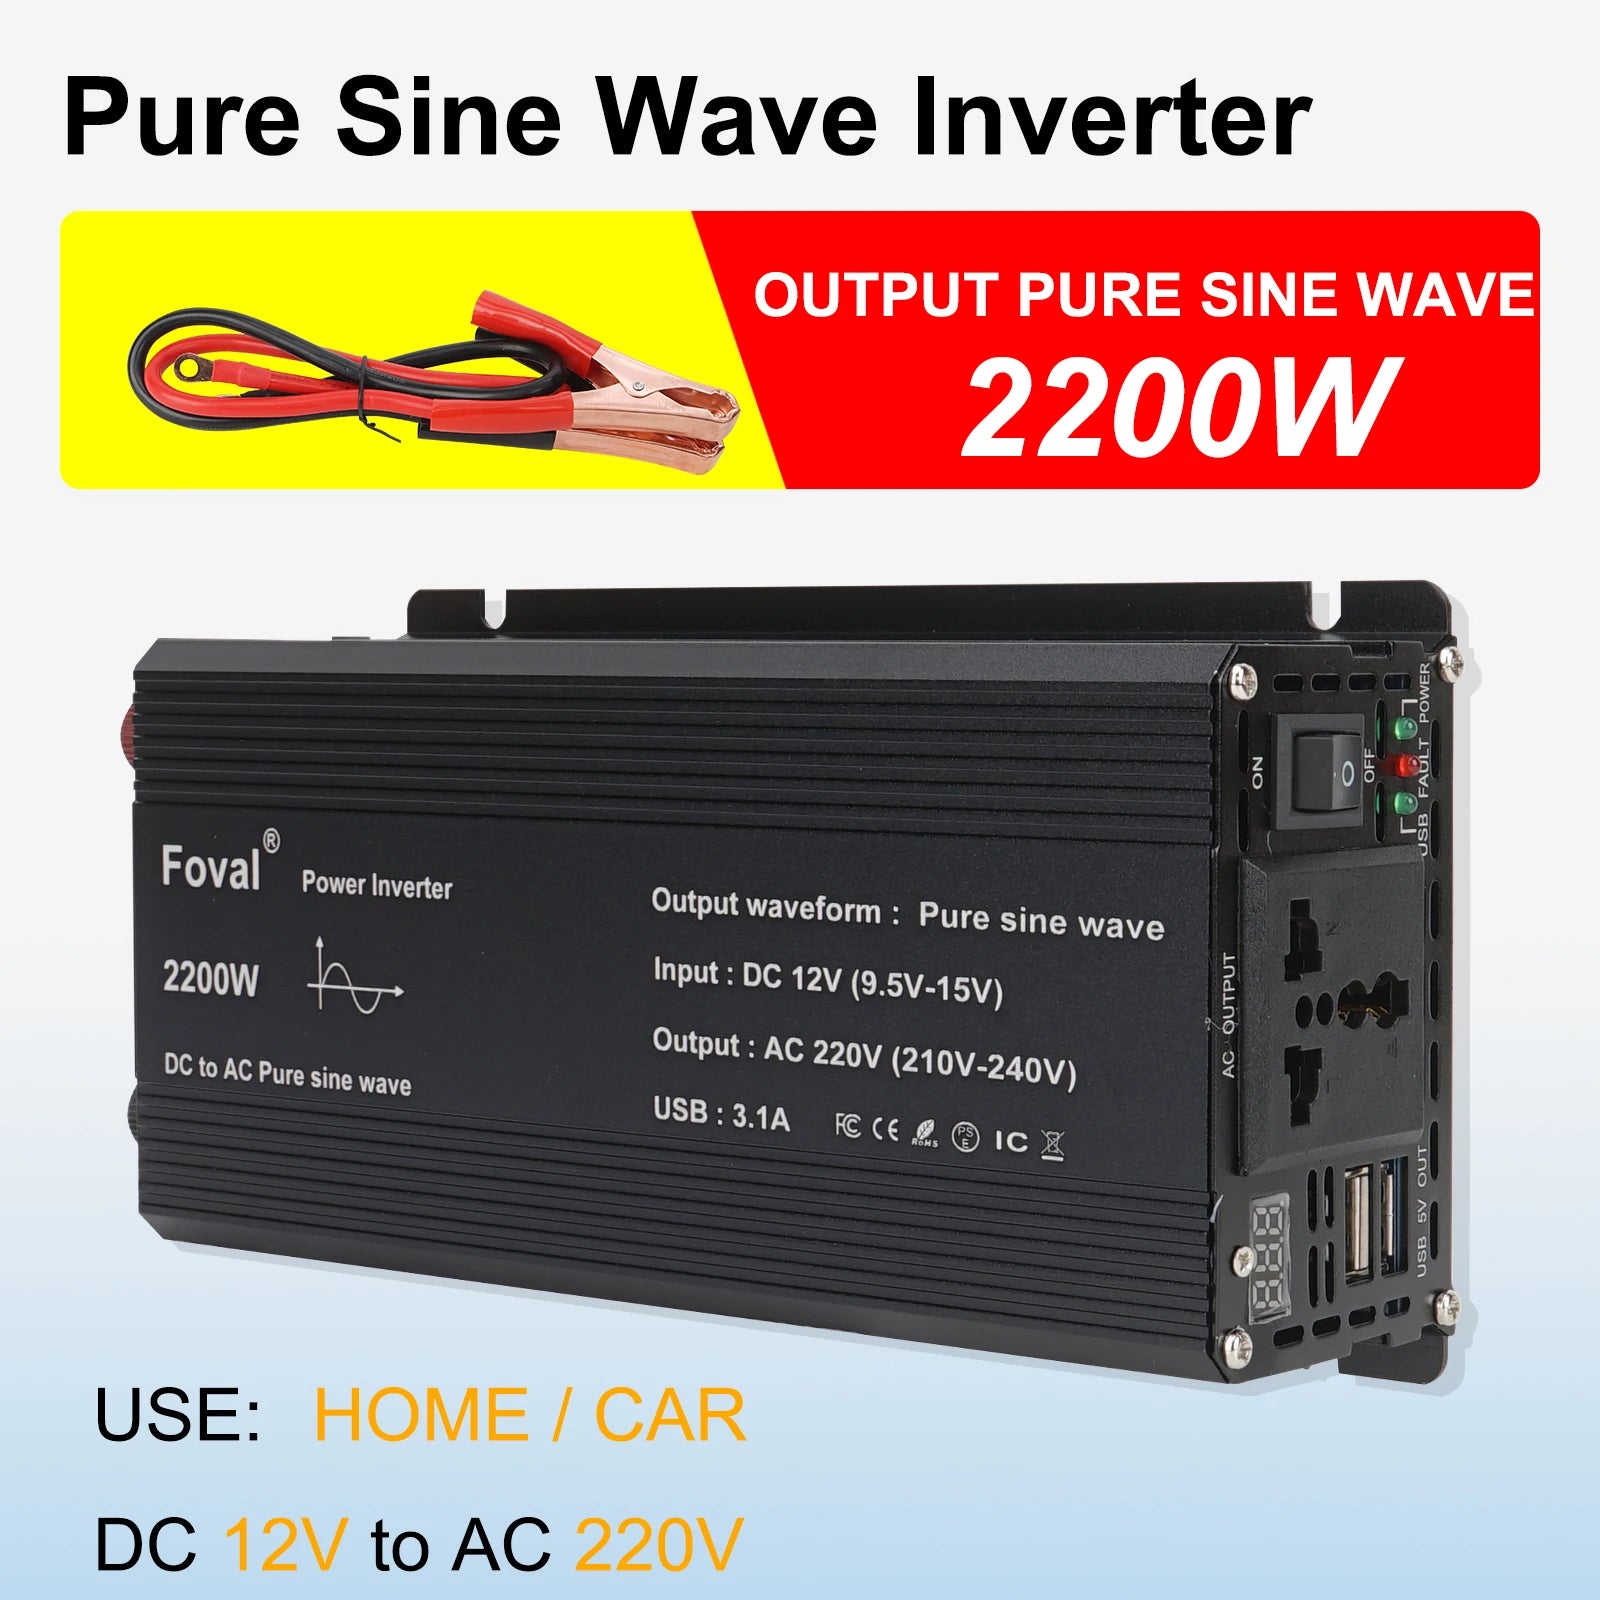 Pure Sine Wave Inverter, Car battery voltage: 12V (family cars) to 24V (trucks), match with suitable inverter voltage.